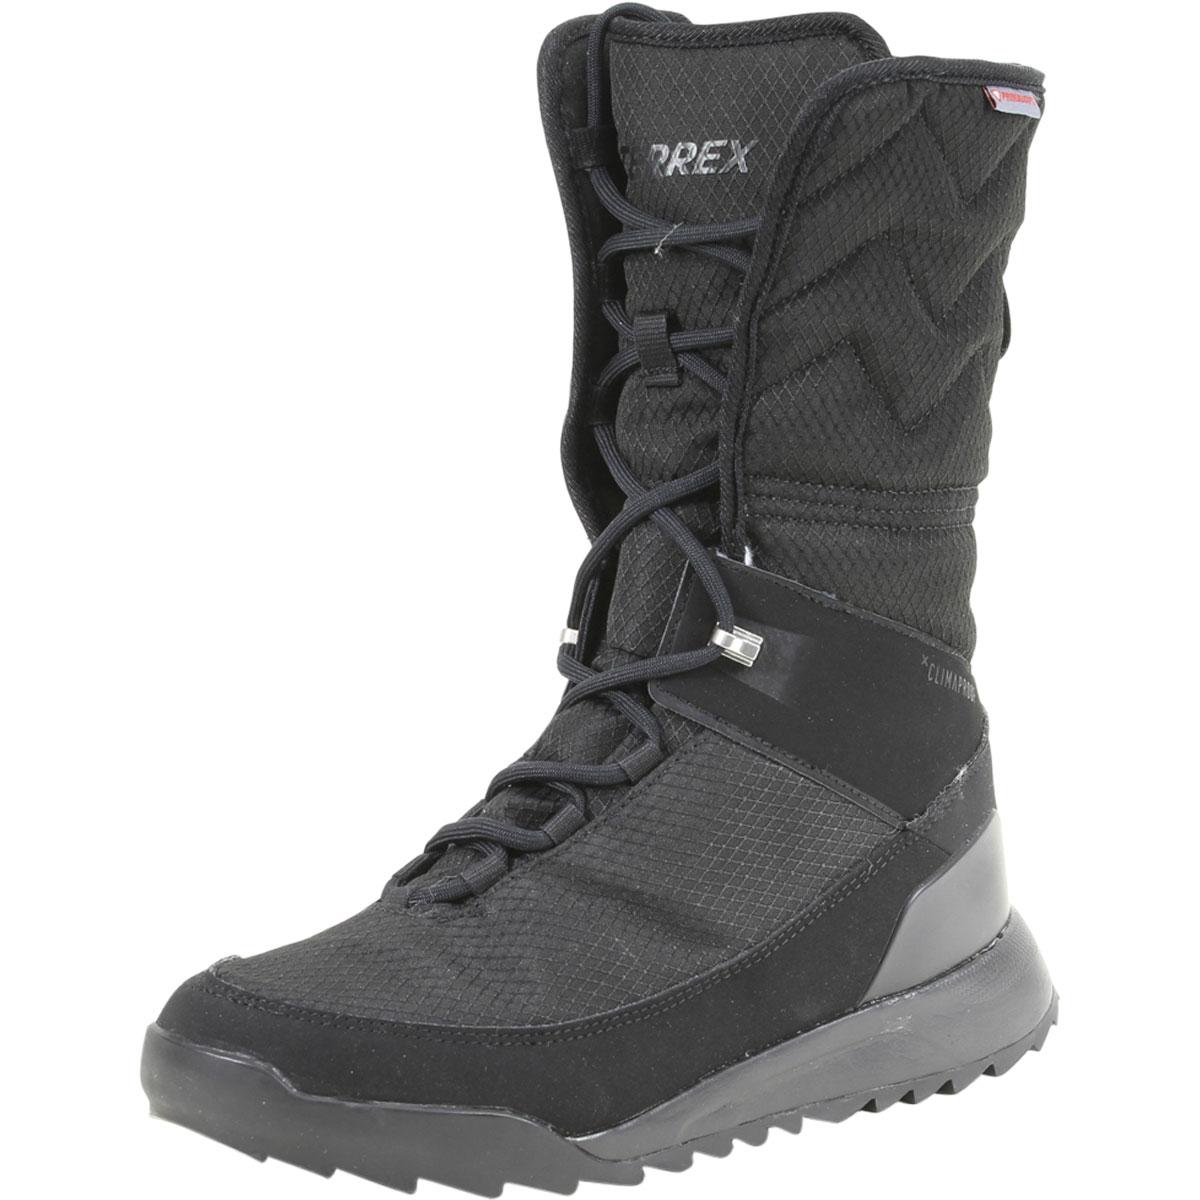 Adidas Women's Terrex Choleah High Climaproof Winter Boots Shoes - Black - 8 B(M) US